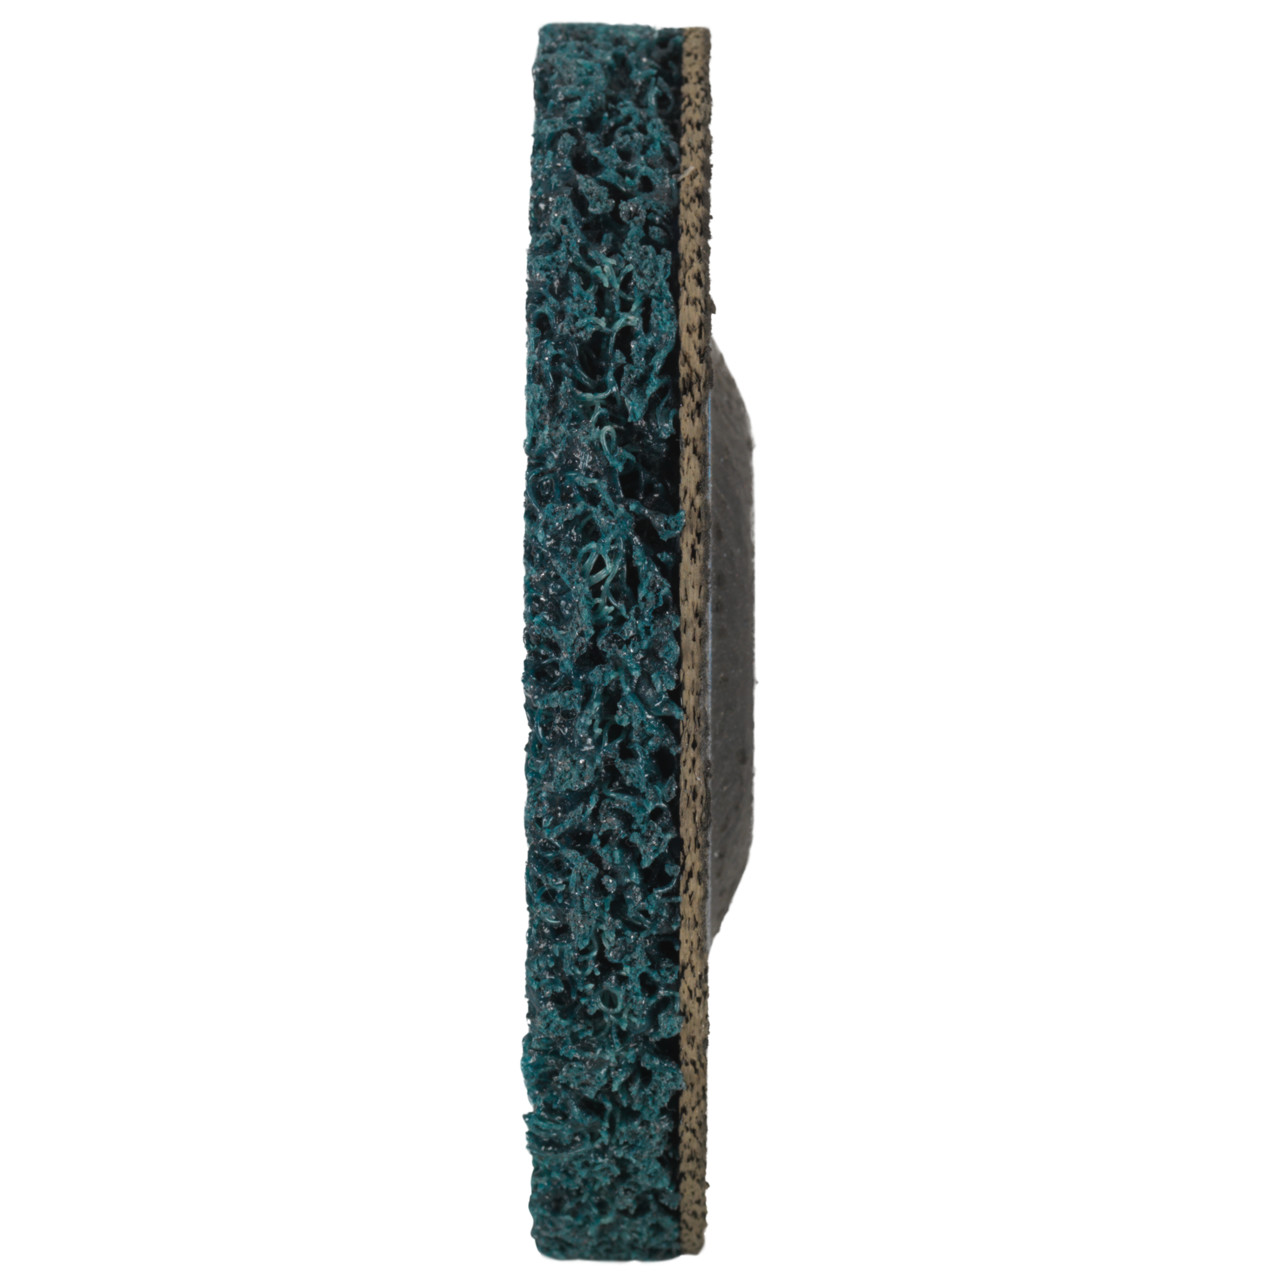 Tyrolit Grove reinigingsschijf DxH 115x22,2 Universeel toepasbaar, C GROB, vorm: 28- (grove reinigingsschijf), Art. 898014